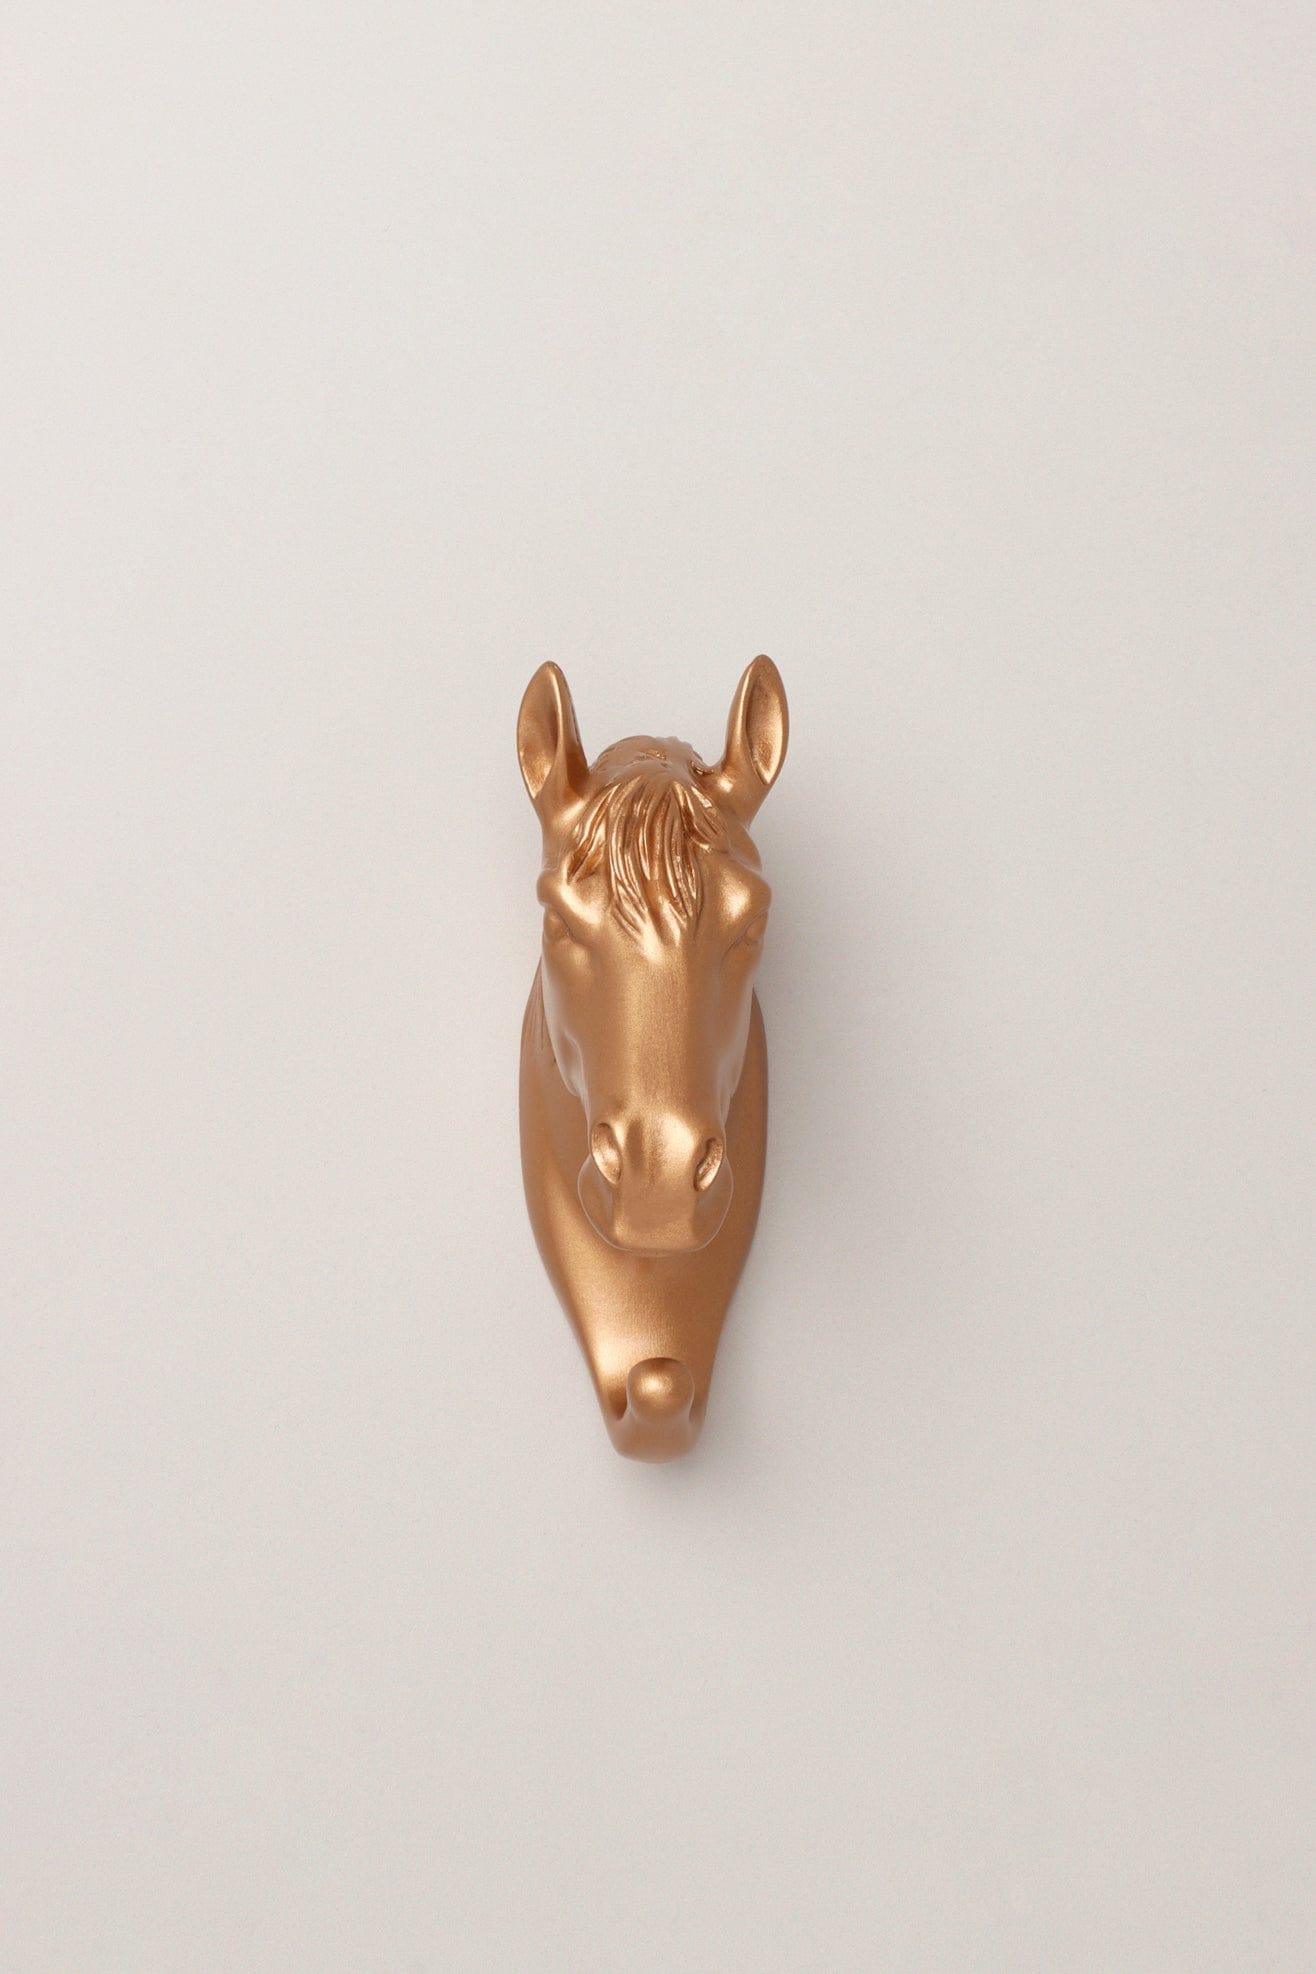 G Decor All Hooks Horse Ornamental Animal Heads Wildlife Bronze Gold Solid Resin Wall Organizer Coat Hook